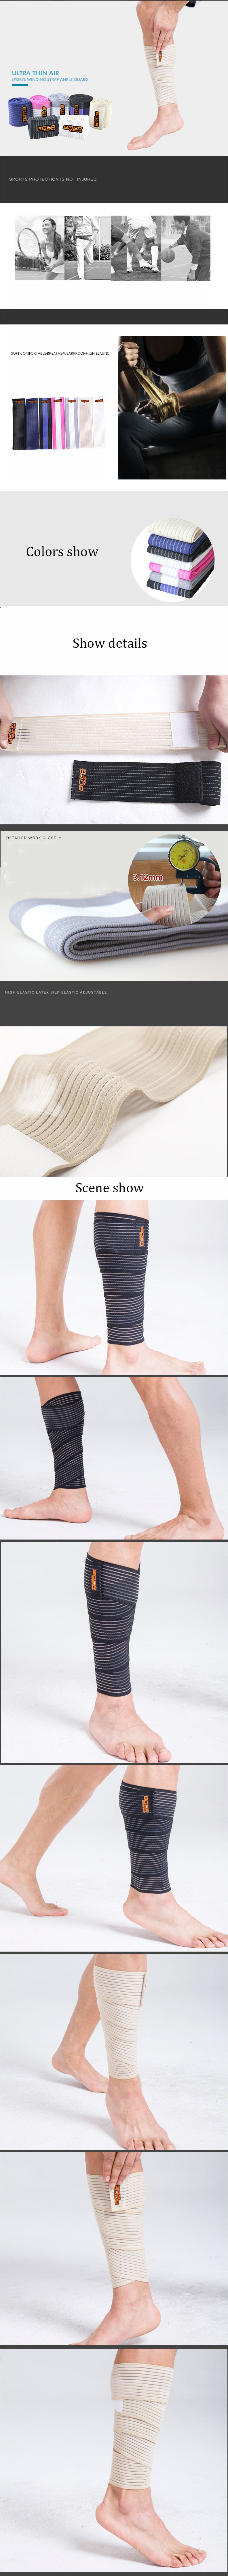 BOER-1PC-Sports-Leg-Support-Adjustable-Breathable-Prevent-Sprains-Leg-Guard-Outdoor-Leg-Bandage-Fitn-1503951-1